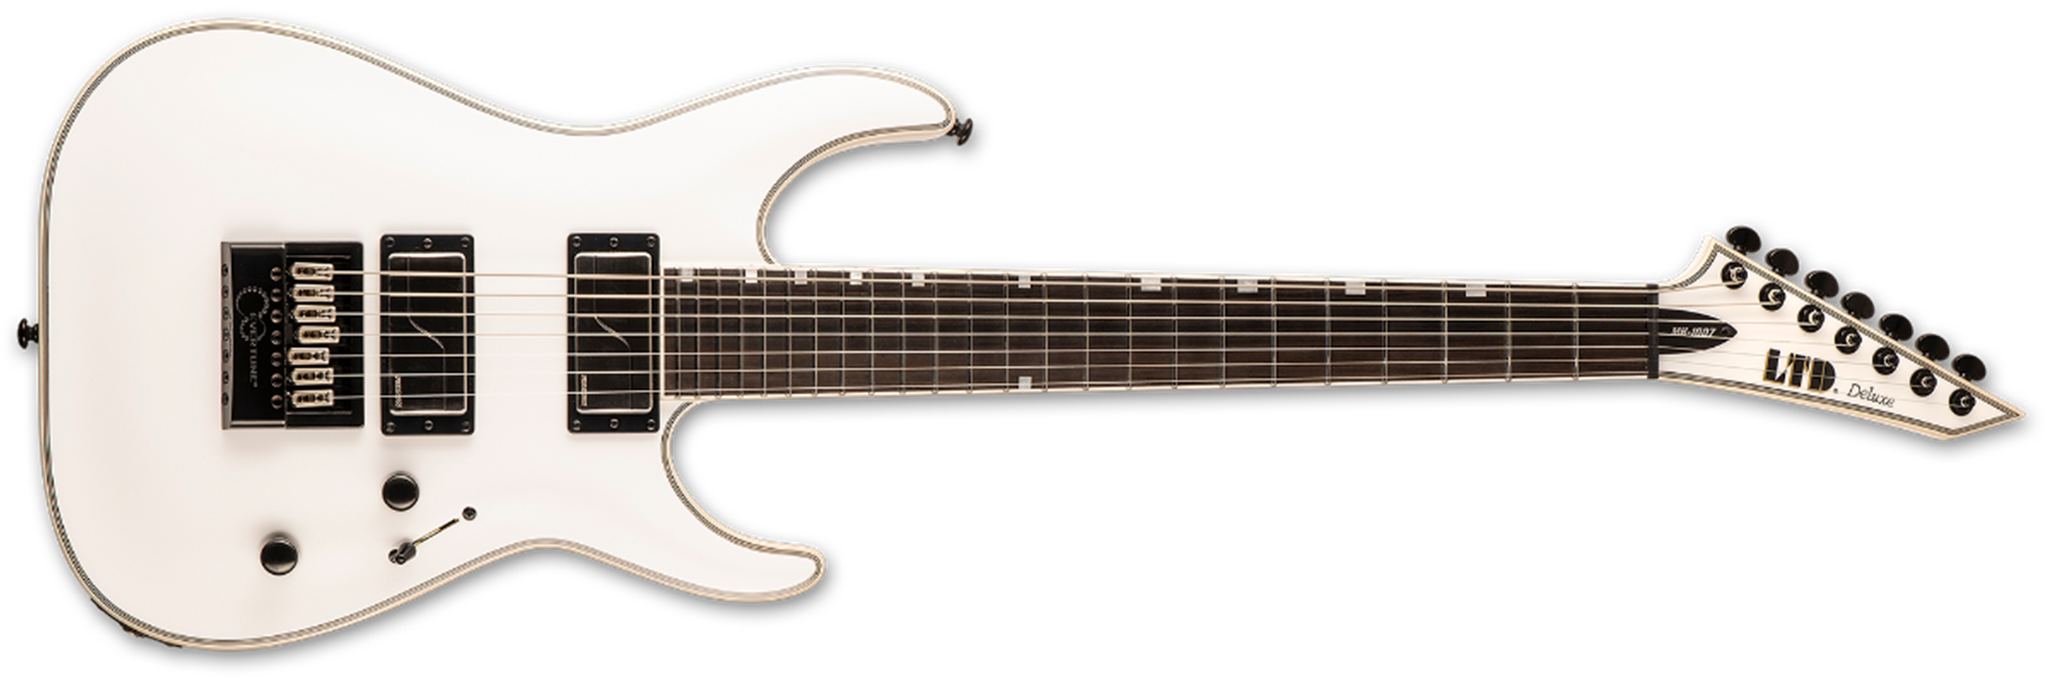 LTD MH-1007 Evertune Snow White 7-String Electric Guitar  